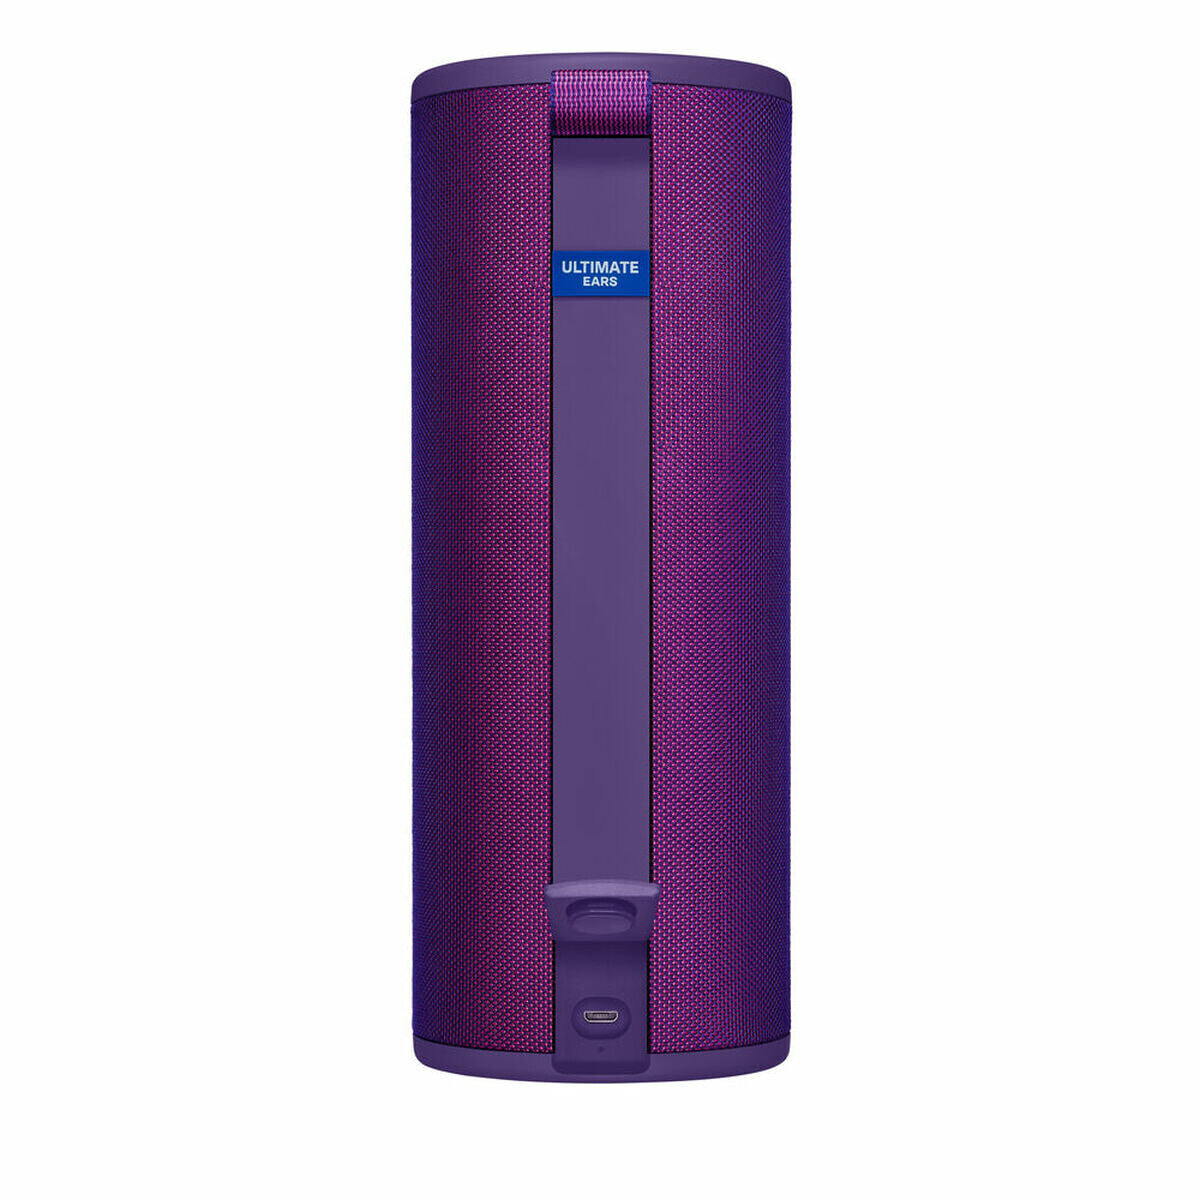 Portable Bluetooth Speakers Logitech 984-001405 Purple Violet